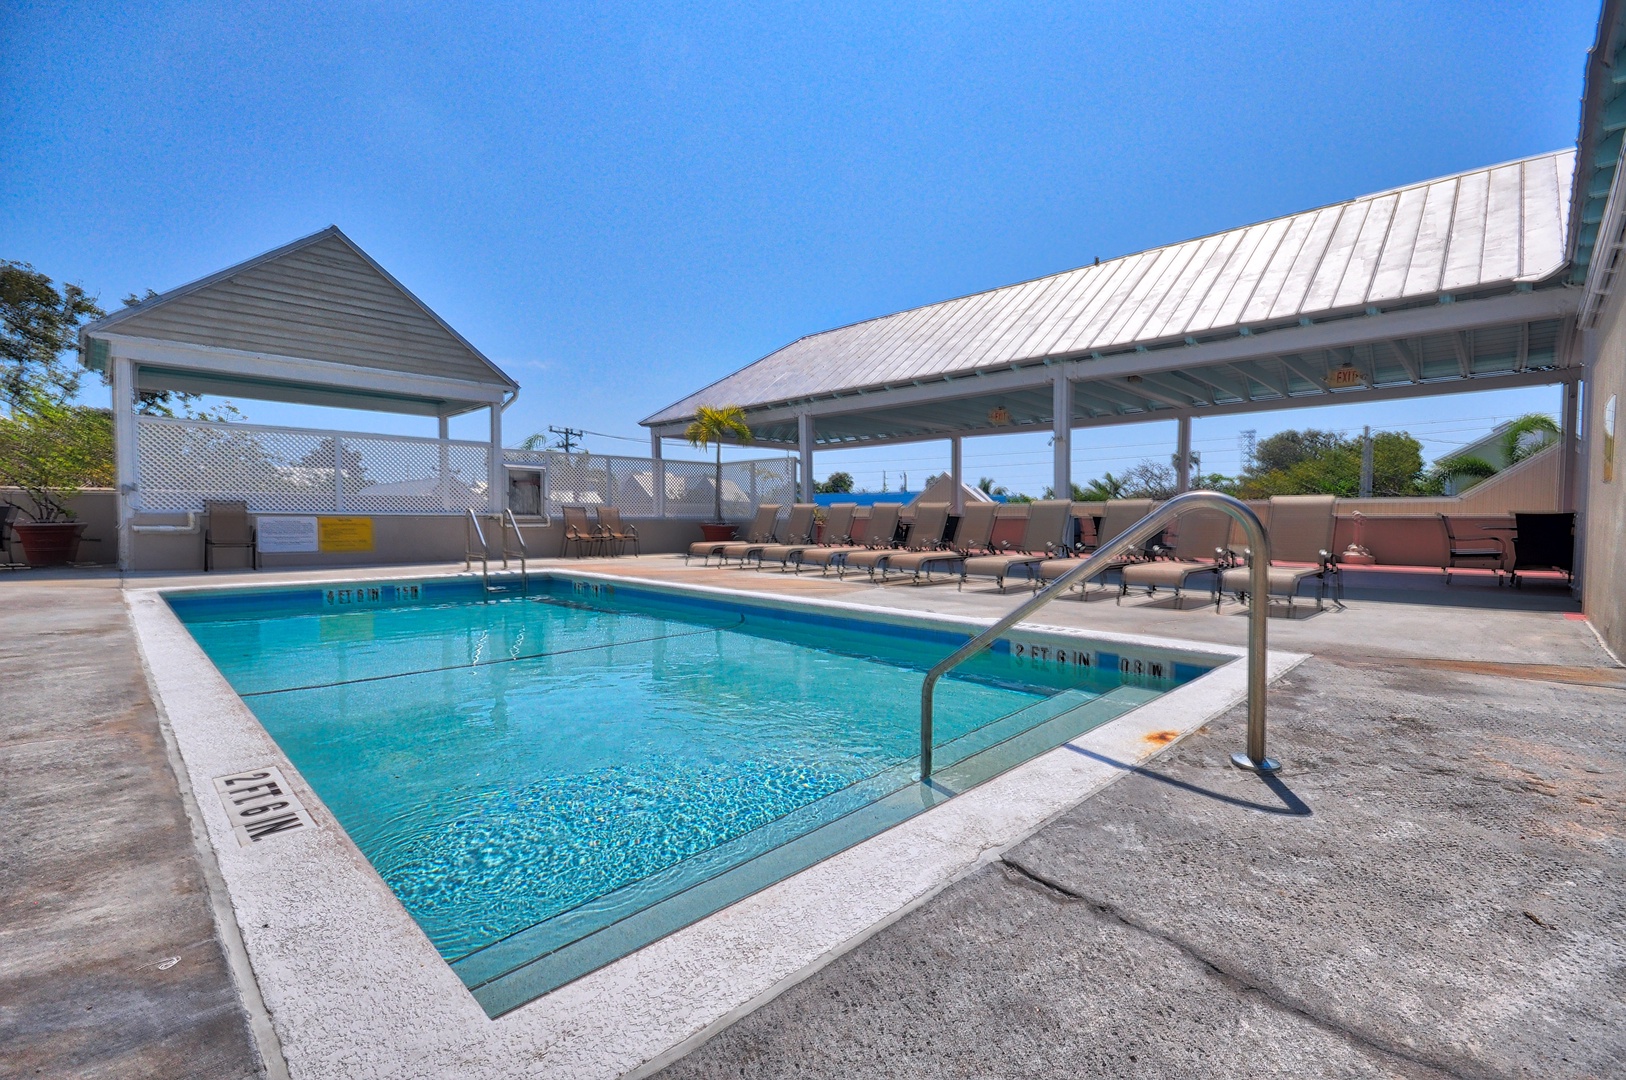 Community Pool and Pavilion Paradise Place #5 @ Duval Square Key West